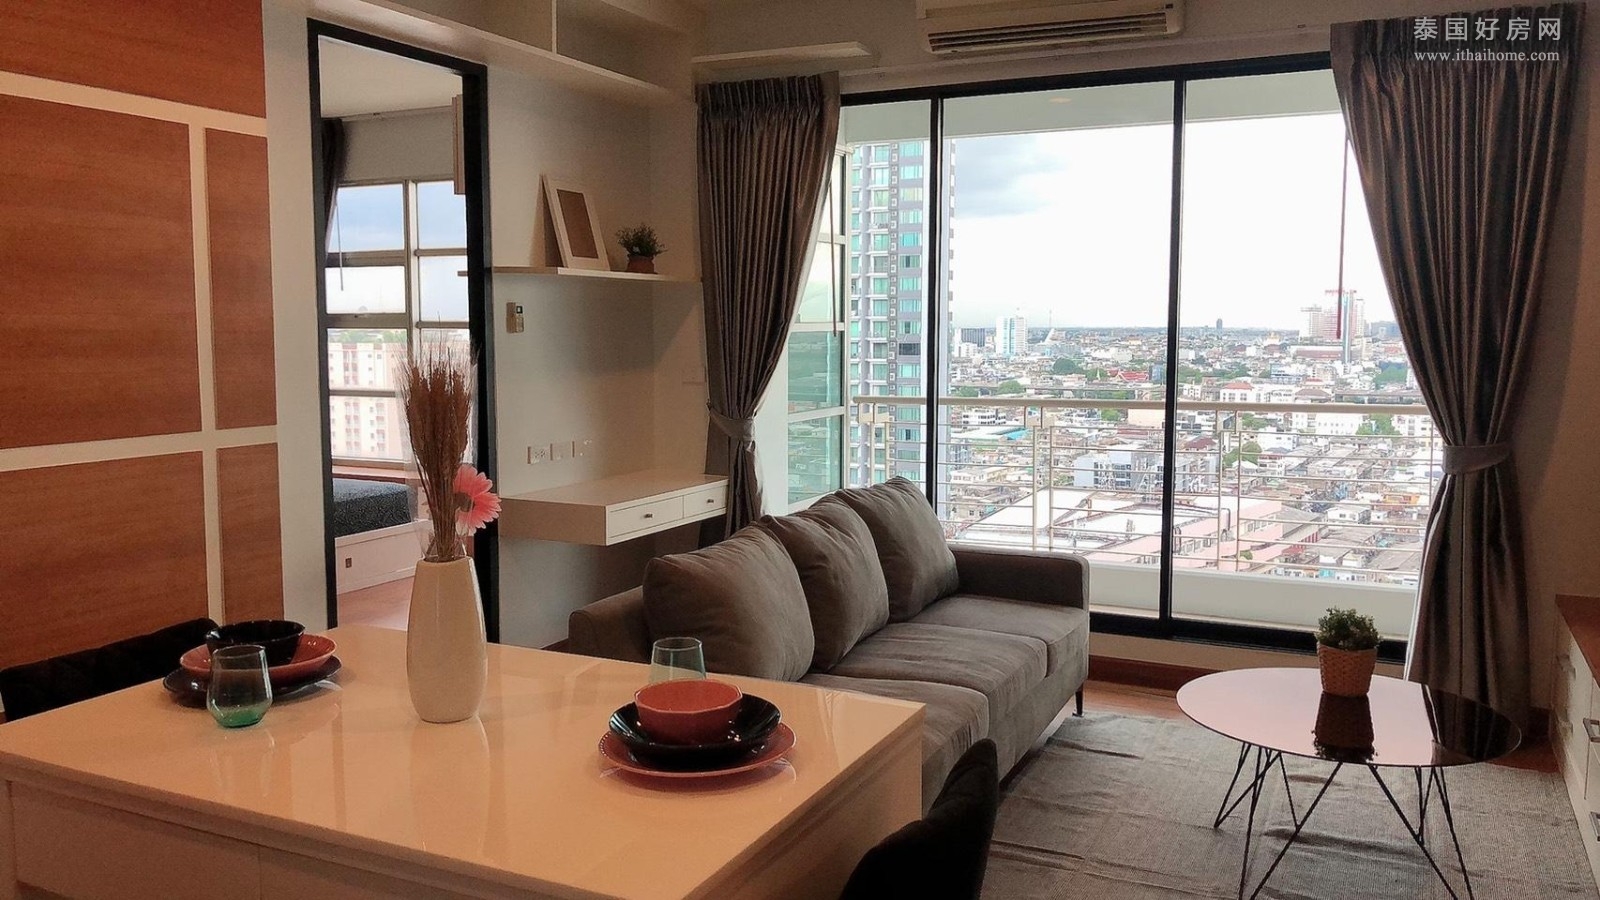 Baan Klang Krung Siam - Pathumwan 公寓与租户出售 1卧55平米 800万泰铢